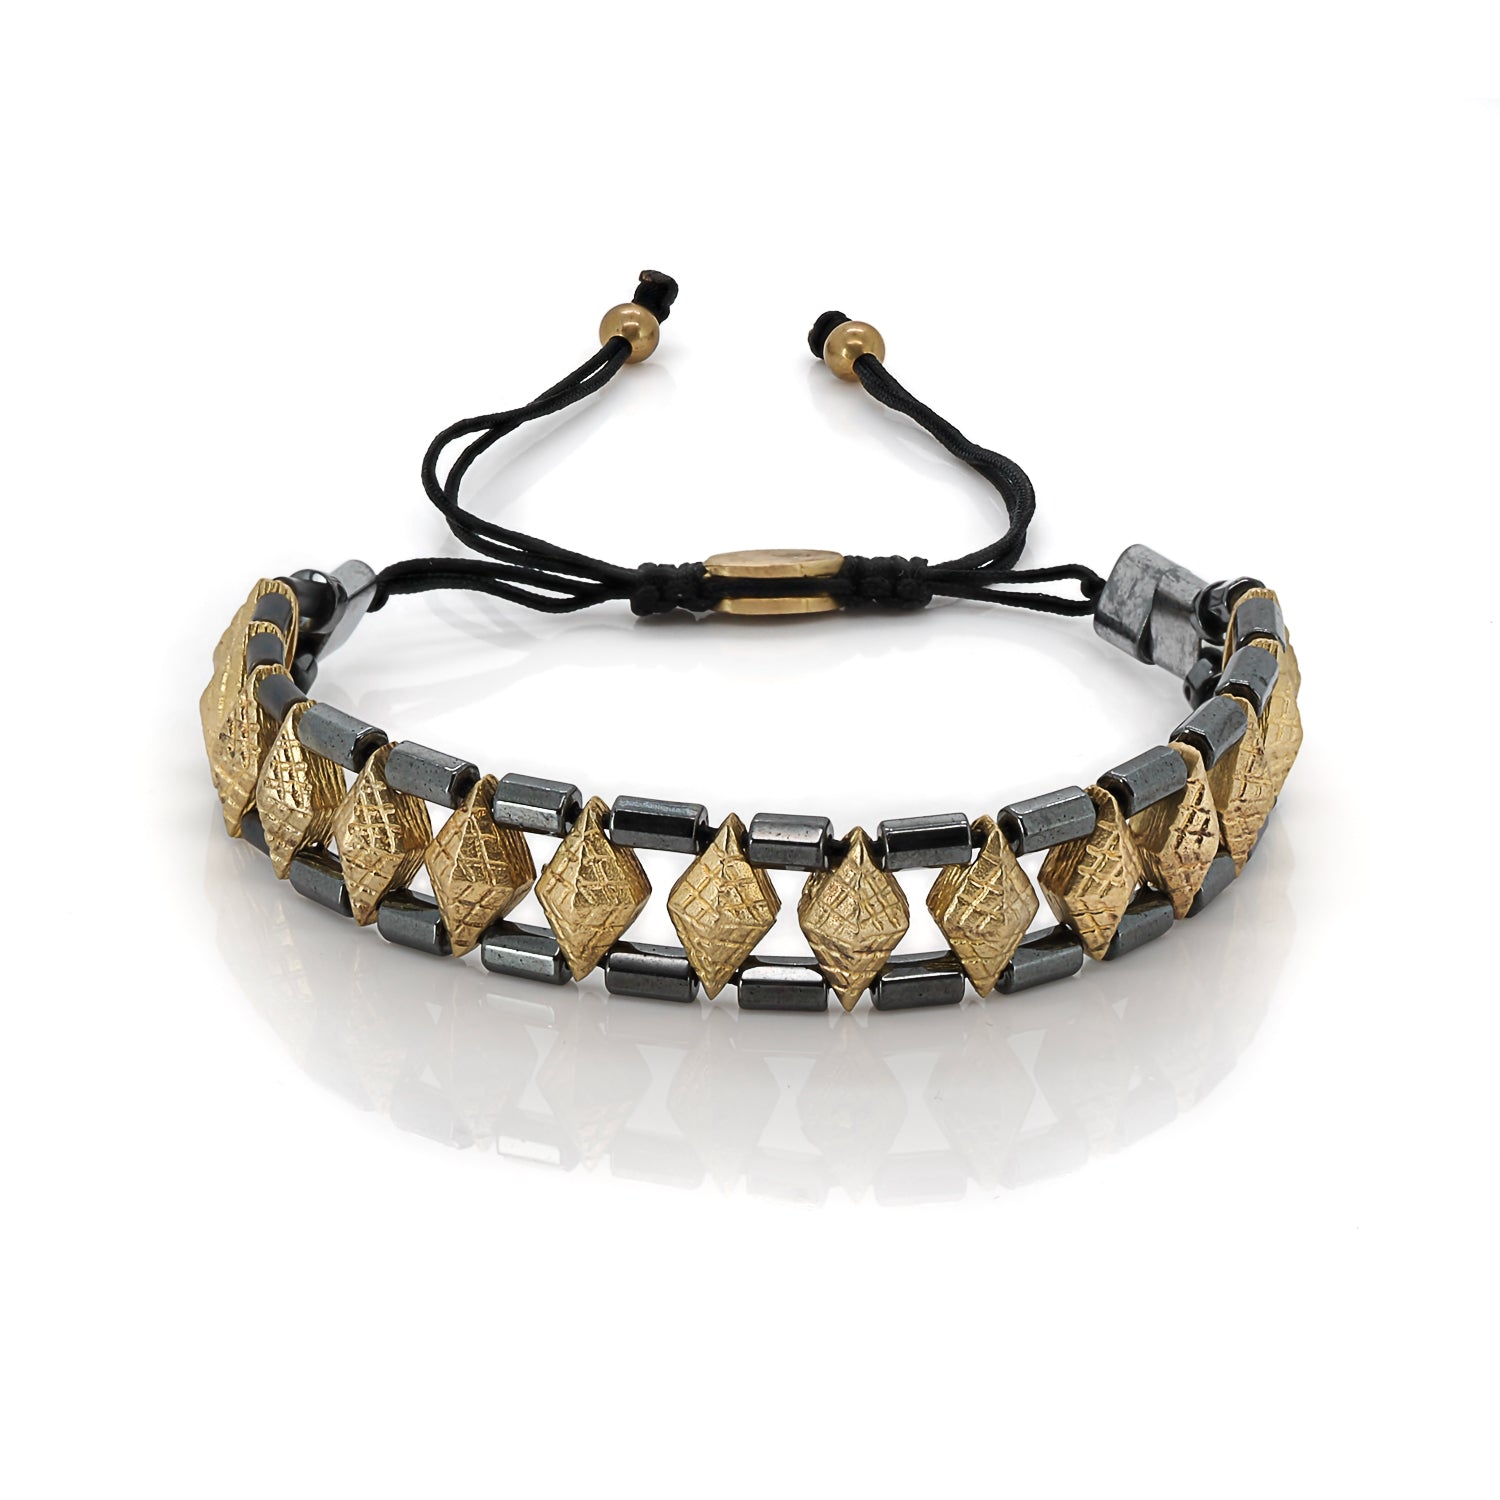 Elegant Black and Gold Hematite Bracelet - Handmade with Hematite Stones and 18K Gold Plated Brass